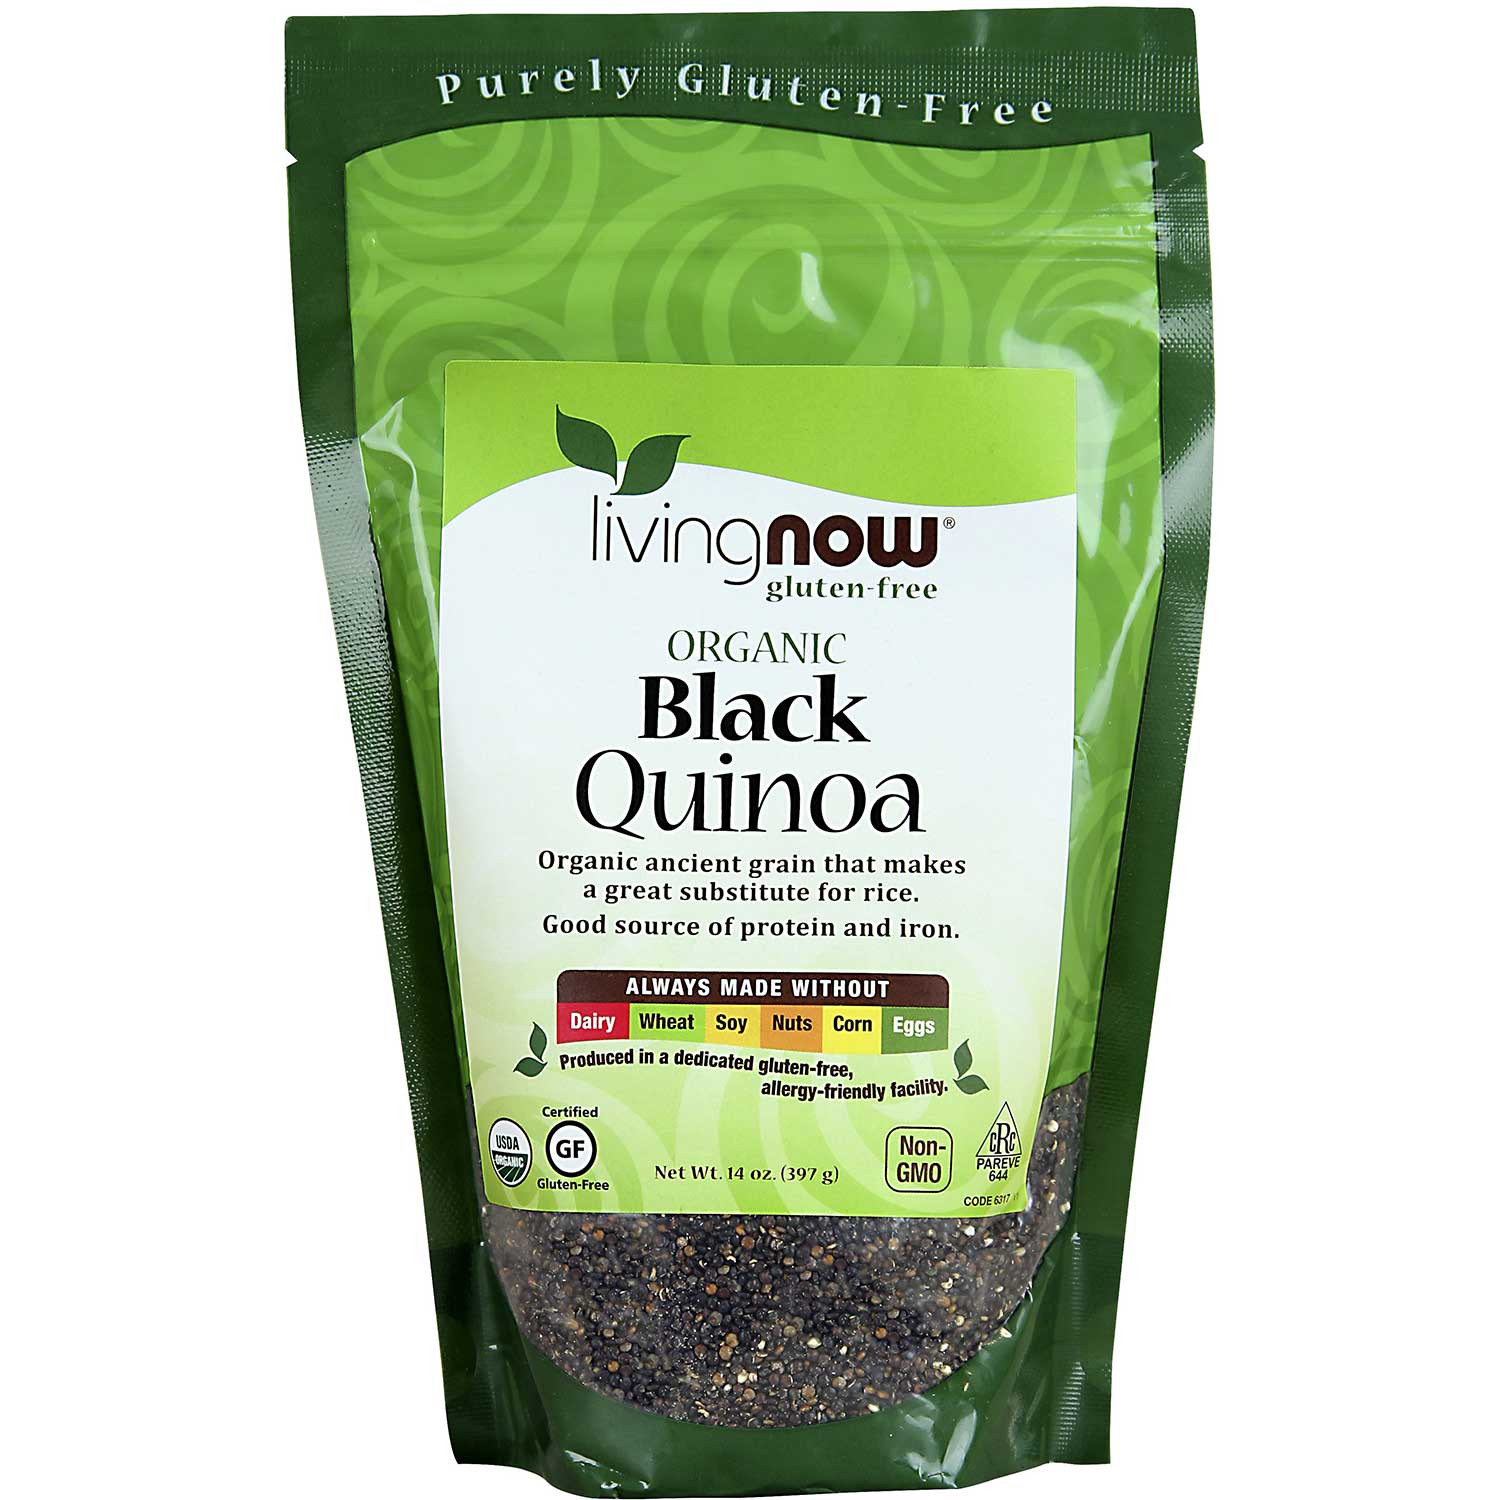 NOW Living NOW Organic Quinoa Grain - Black, 397g